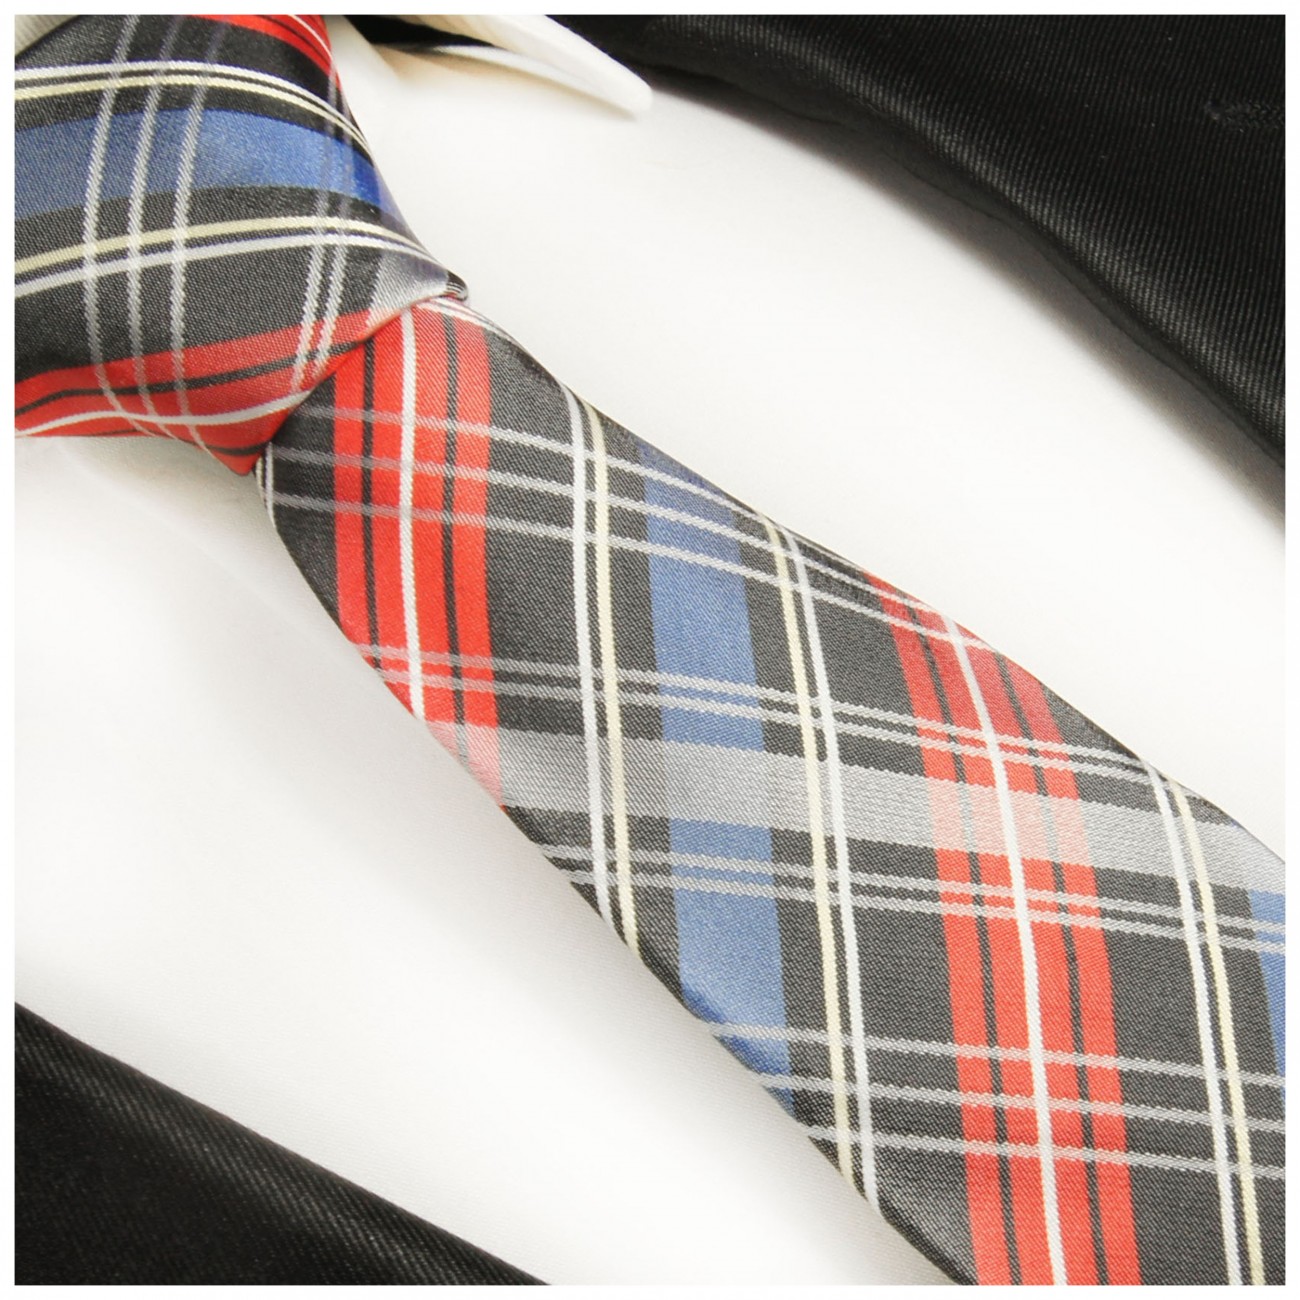 Blue red tie plaid necktie - silk mens tie and pocket square and cufflinks